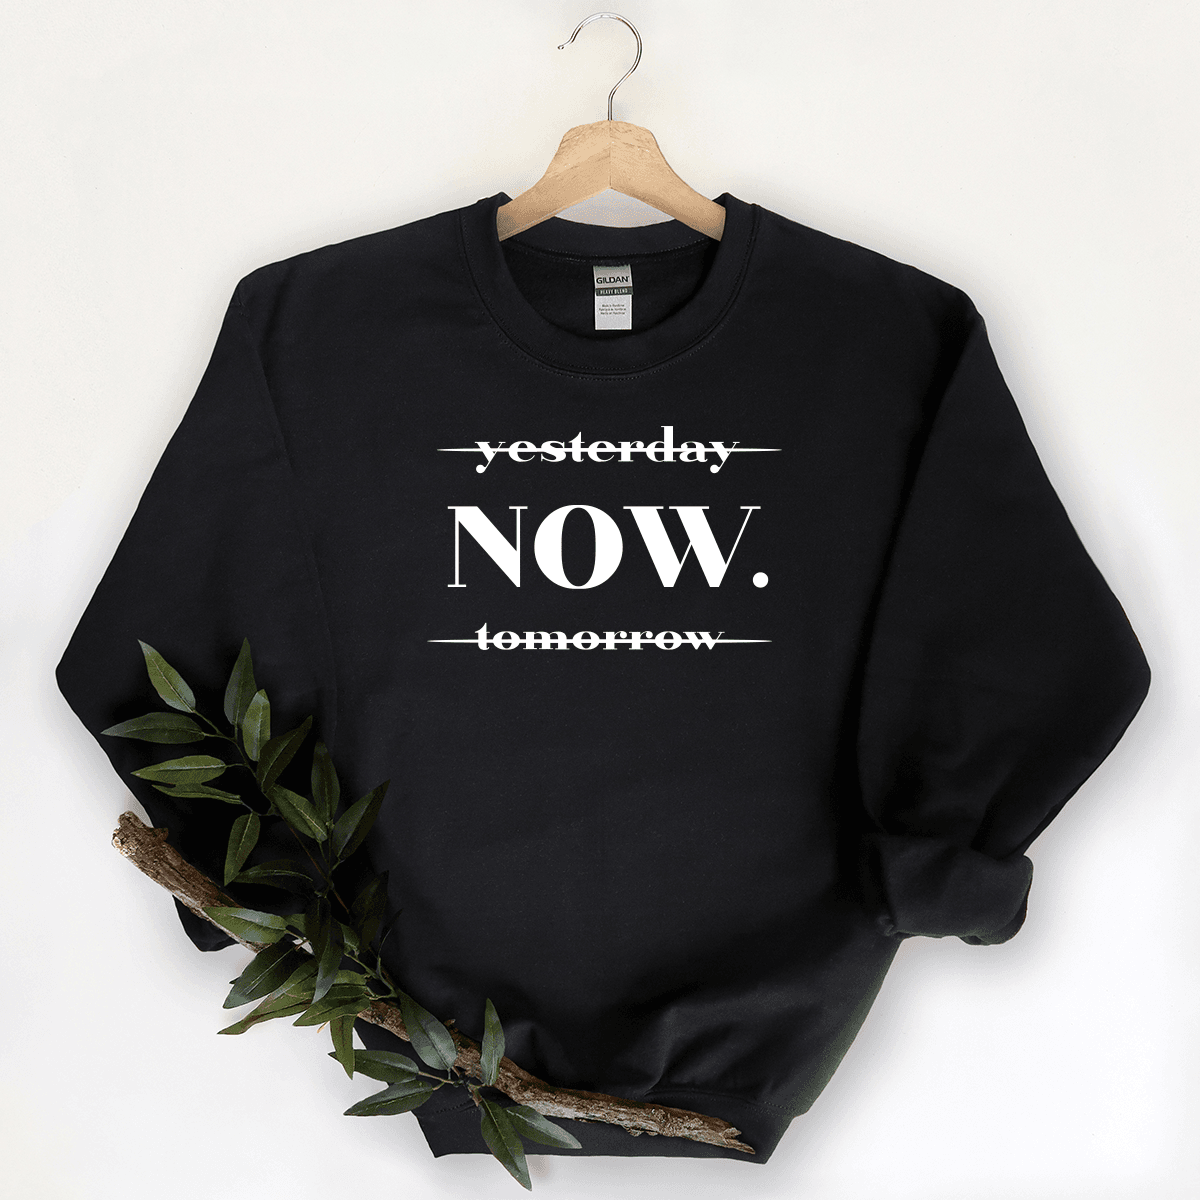 NOW (Not Yesterday Or Tomorrow) - Sweatshirt